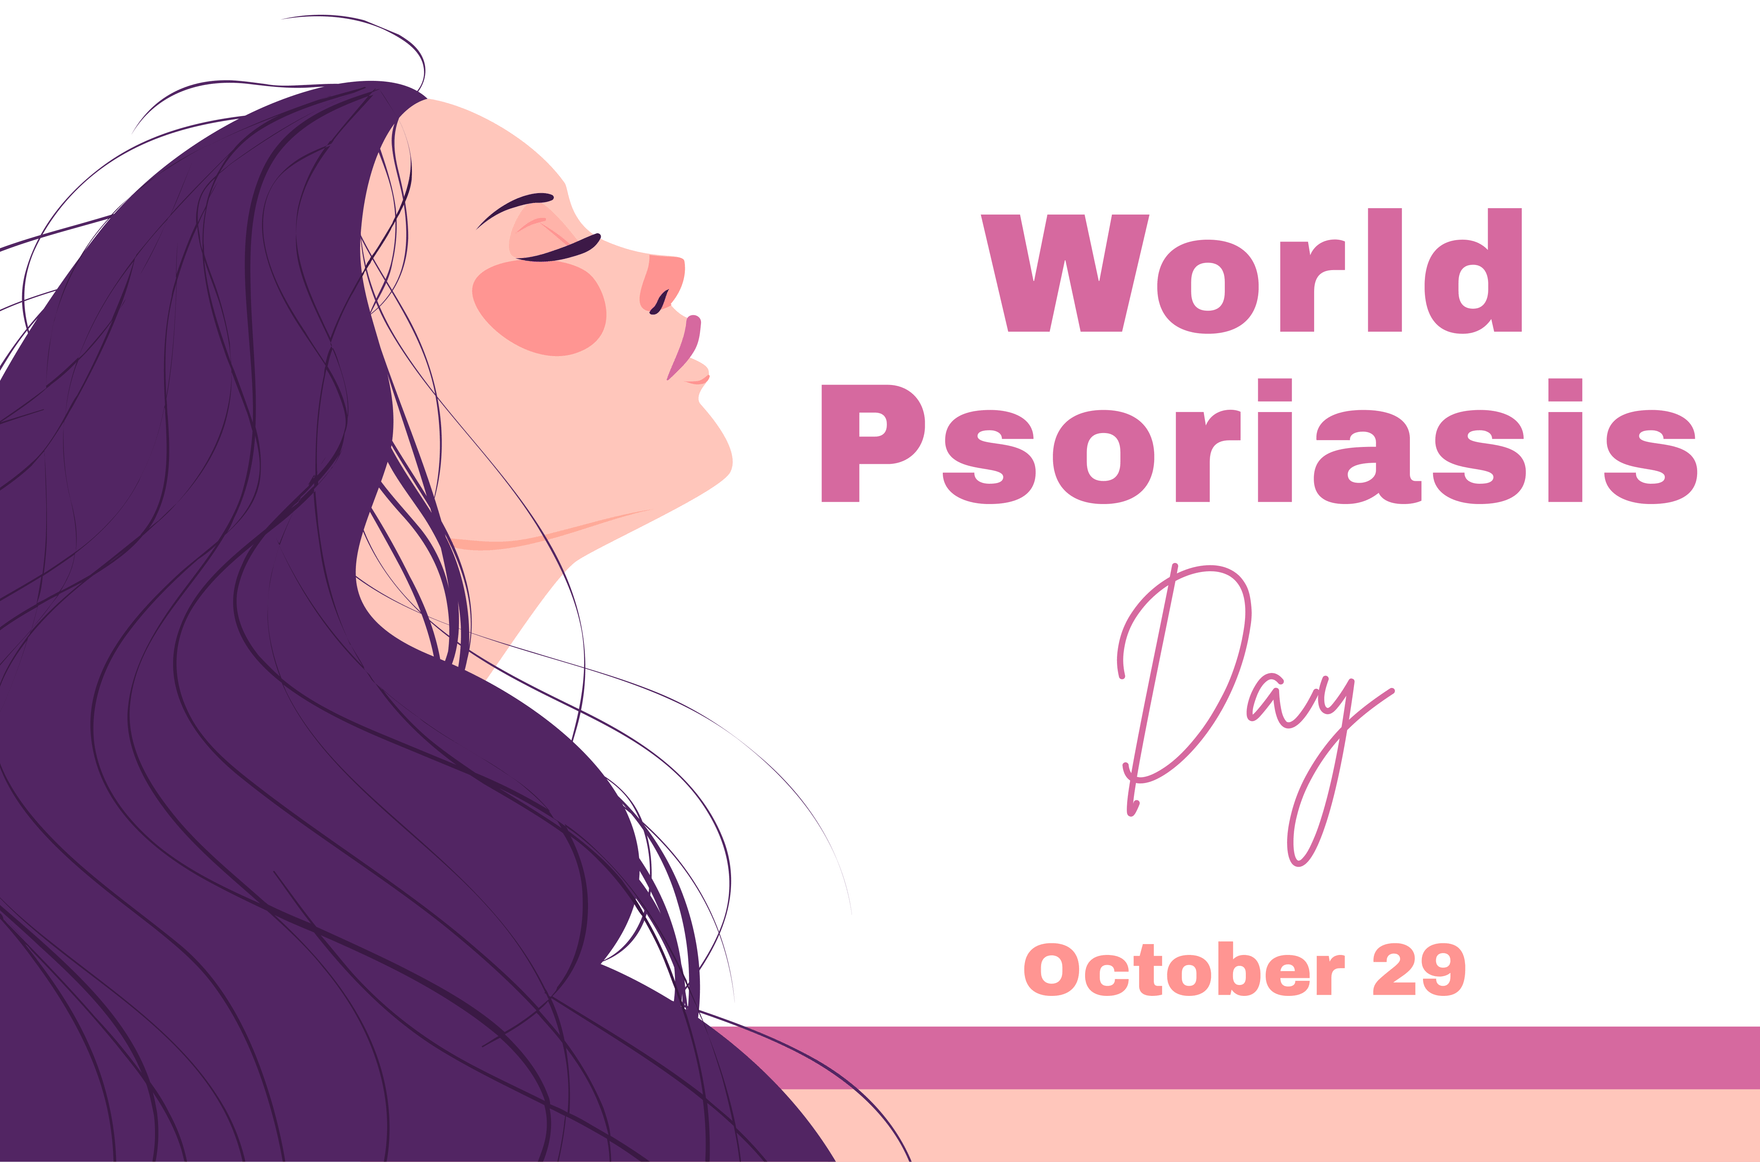 World Psoriasis Day Banner in Illustrator, PSD, EPS, SVG, JPG, PNG